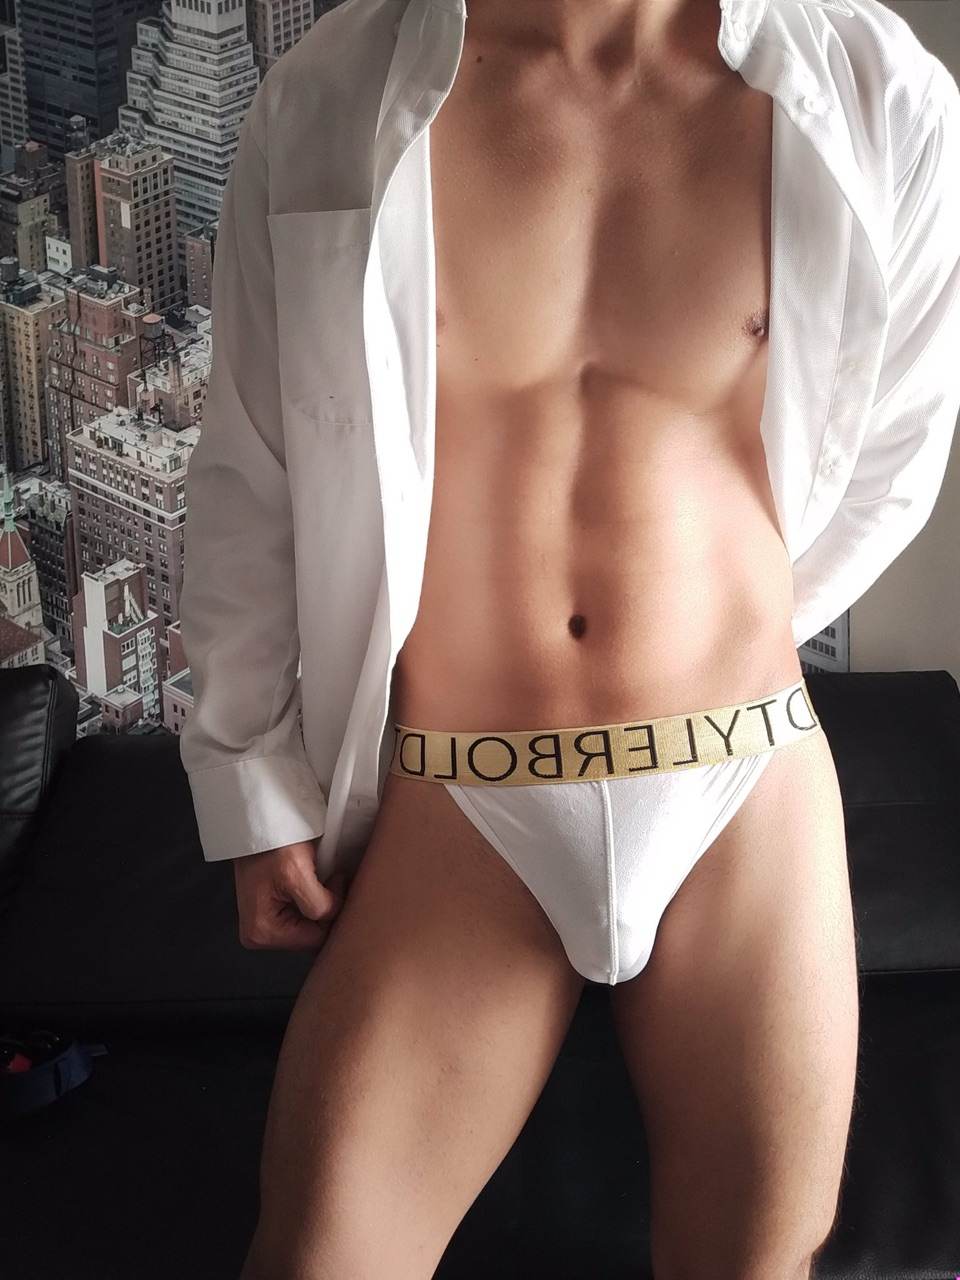 Hot men in underwear 608